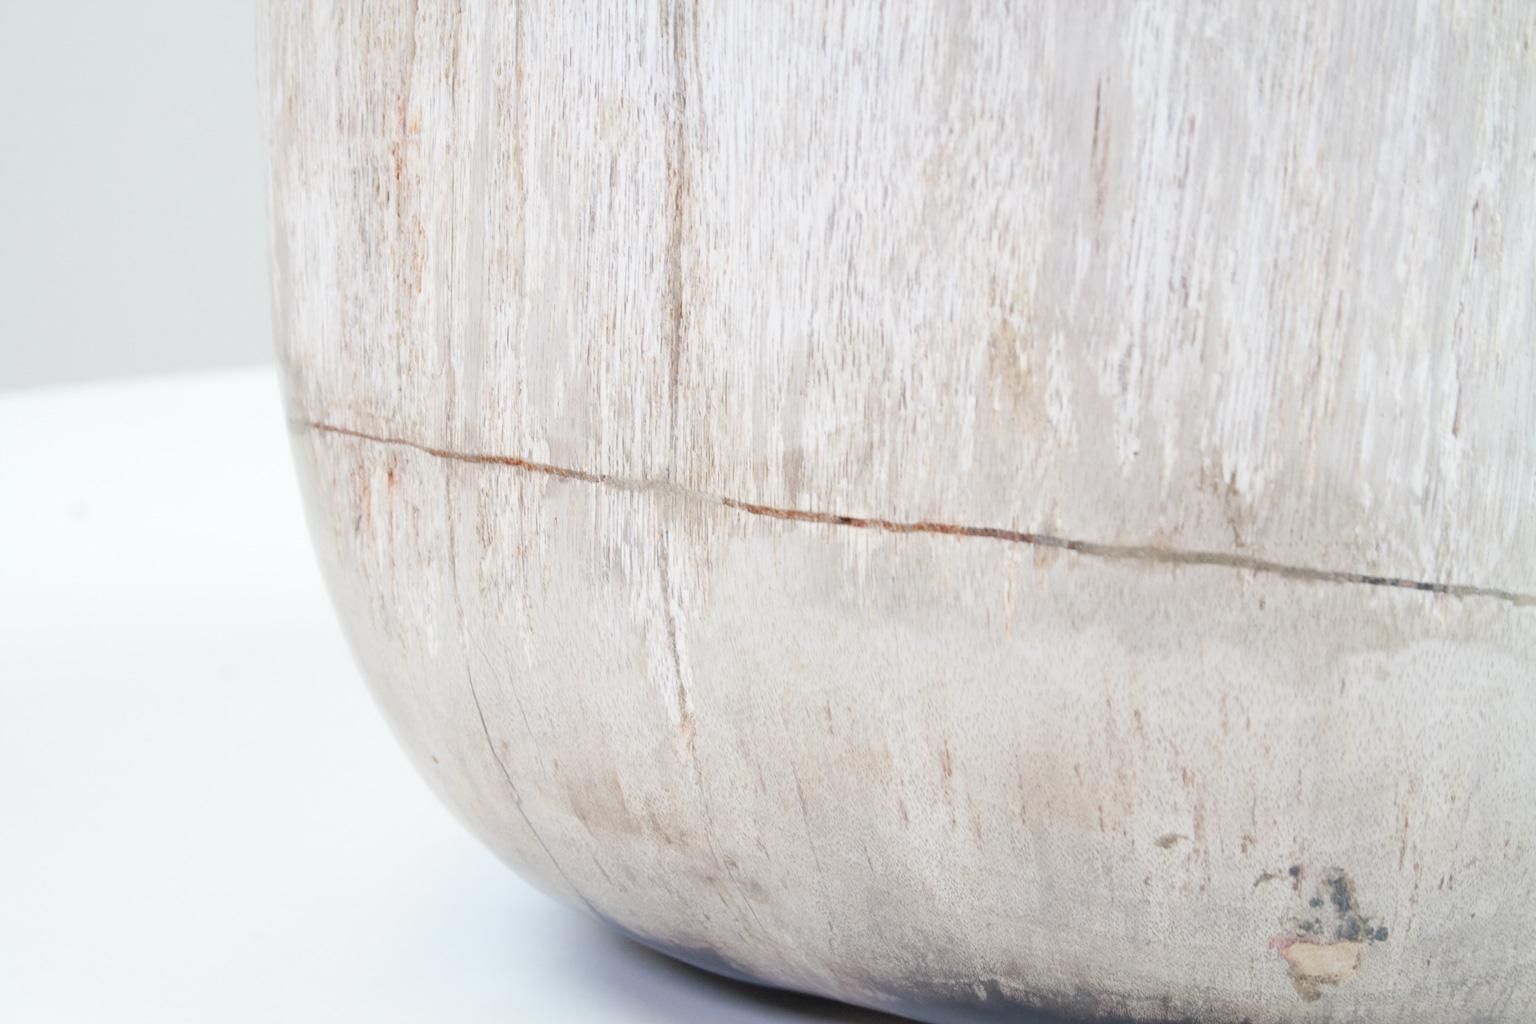 Deep Petrified Wood Bowl in Beige and Hard Coal, Home Accessory Organic Original 1